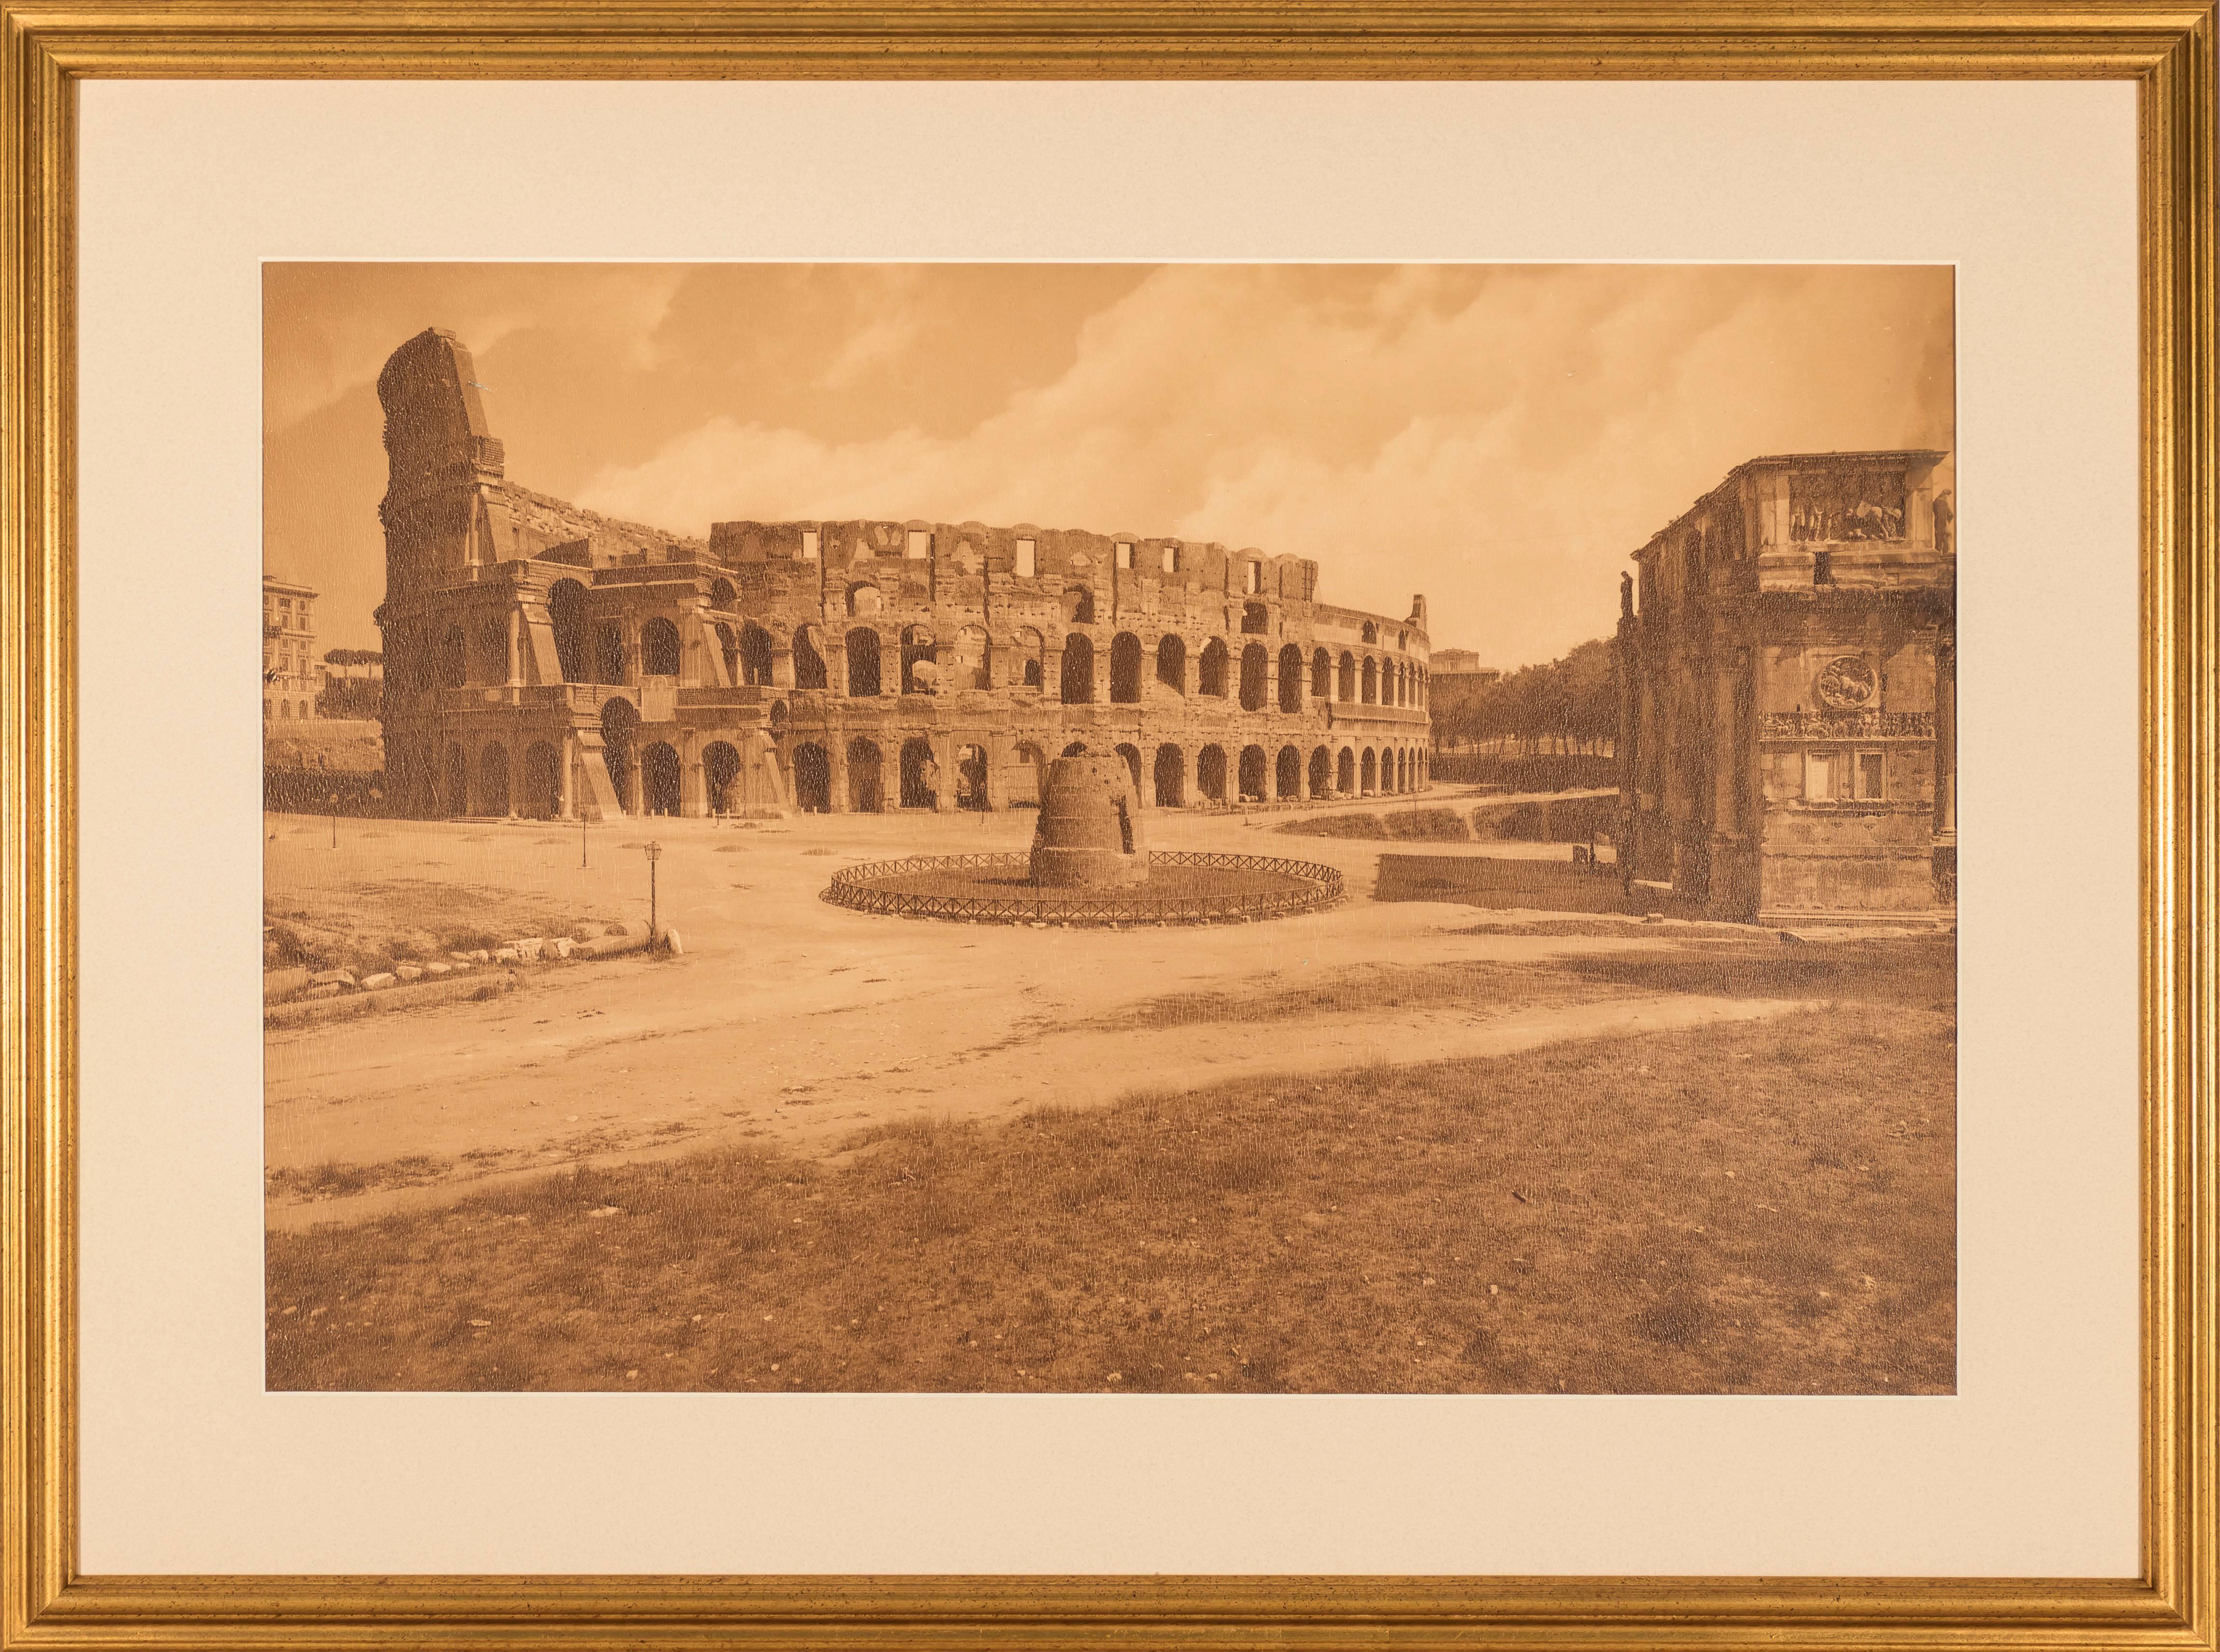 Unknown Landscape Photograph - The Colosseum in Rome